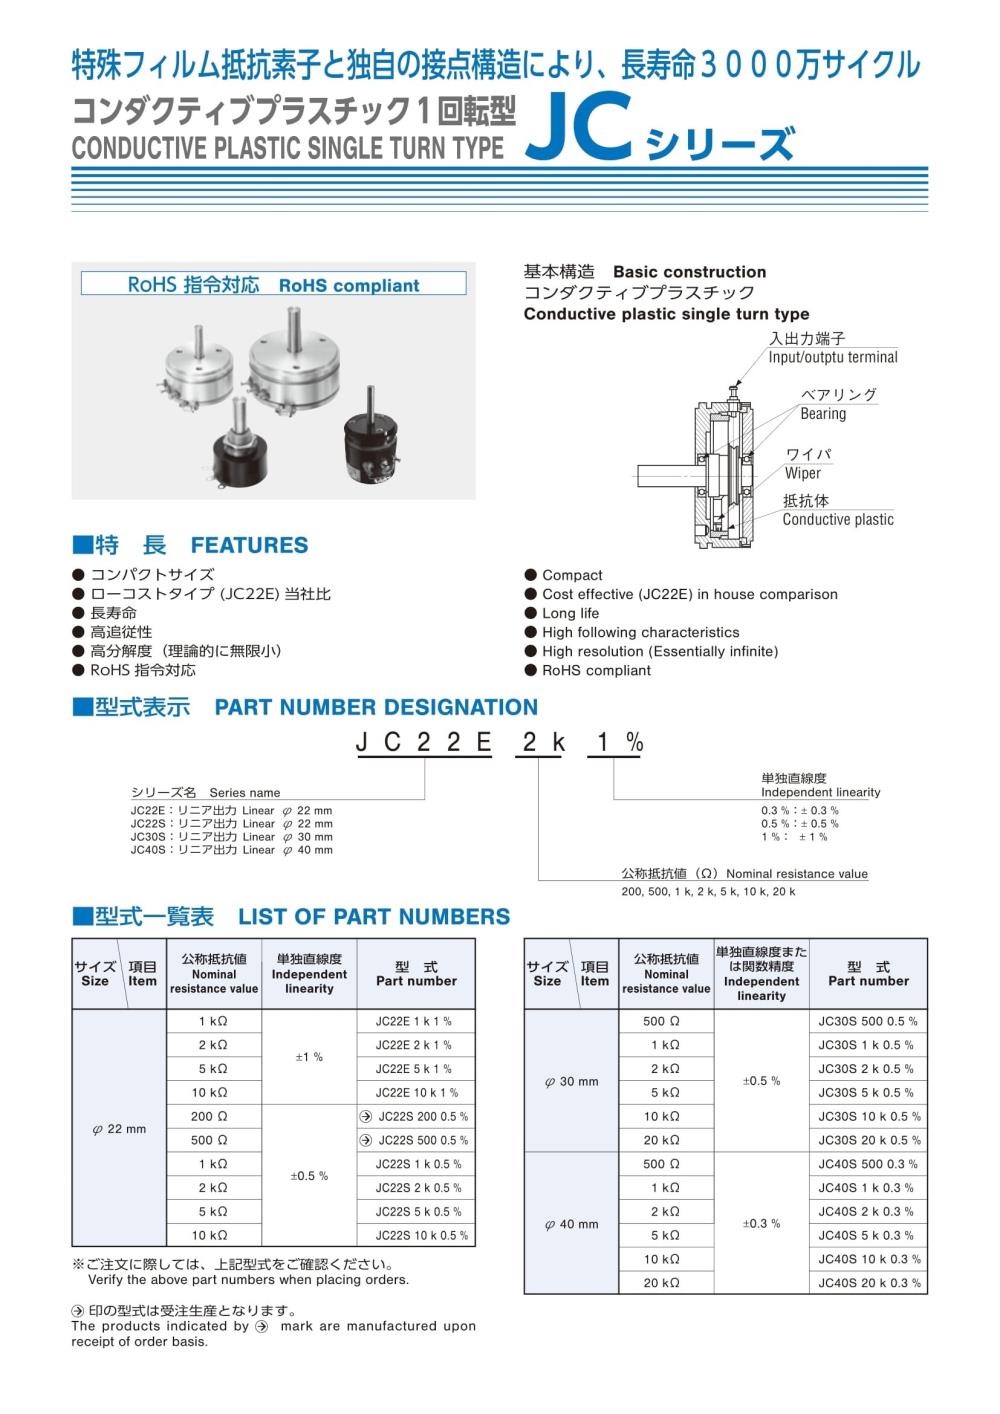 NIDEC Potentiometer JC22S Series,JC22S 200 0.5%, JC22S 500 0.5%, JC22S 1K 0.5%, JC22S 2K 0.5%, JC22S 5K 0.5%, JC22S 10K 0.5%, NIDEC, Potentiometer,NIDEC,Instruments and Controls/Potentiometers